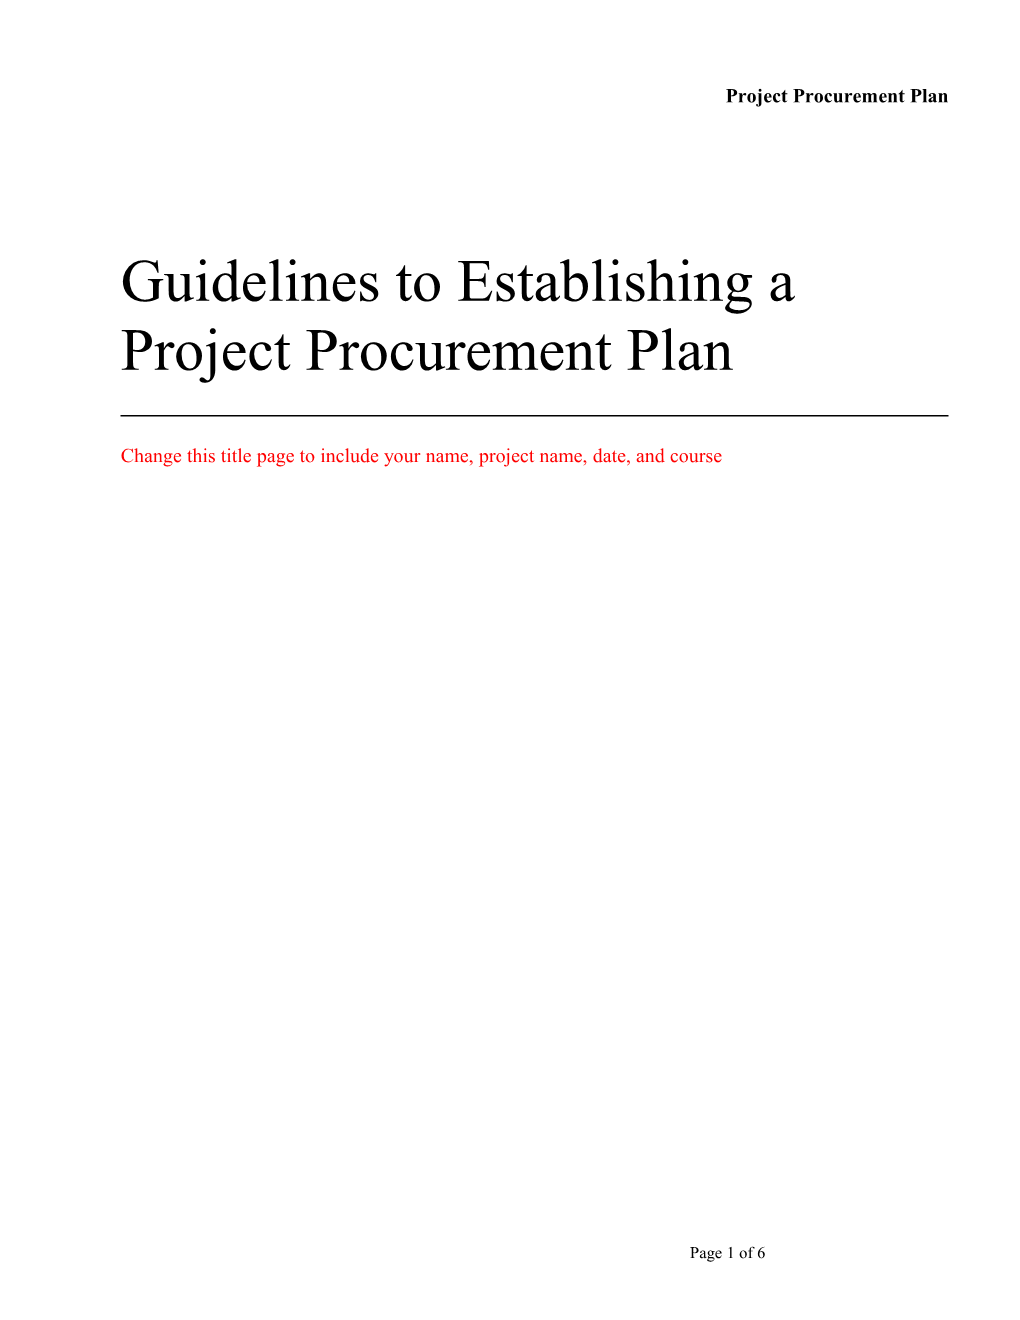 Project Procurement Plan (PPP) Template